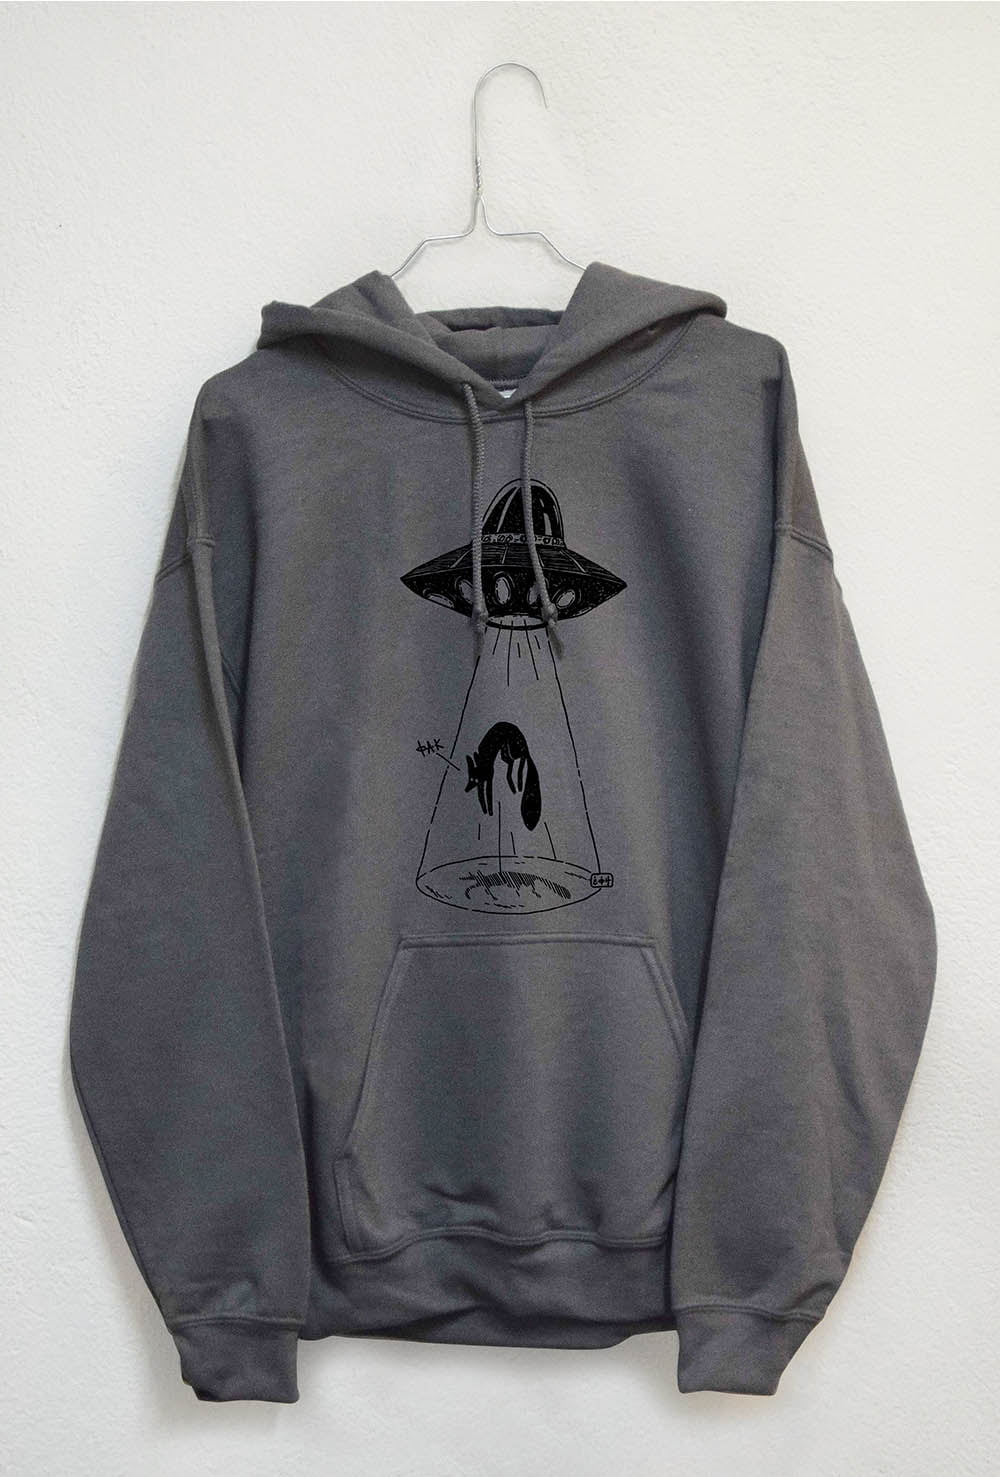 Subworks carchoal hoodie alien ufo abduction fox